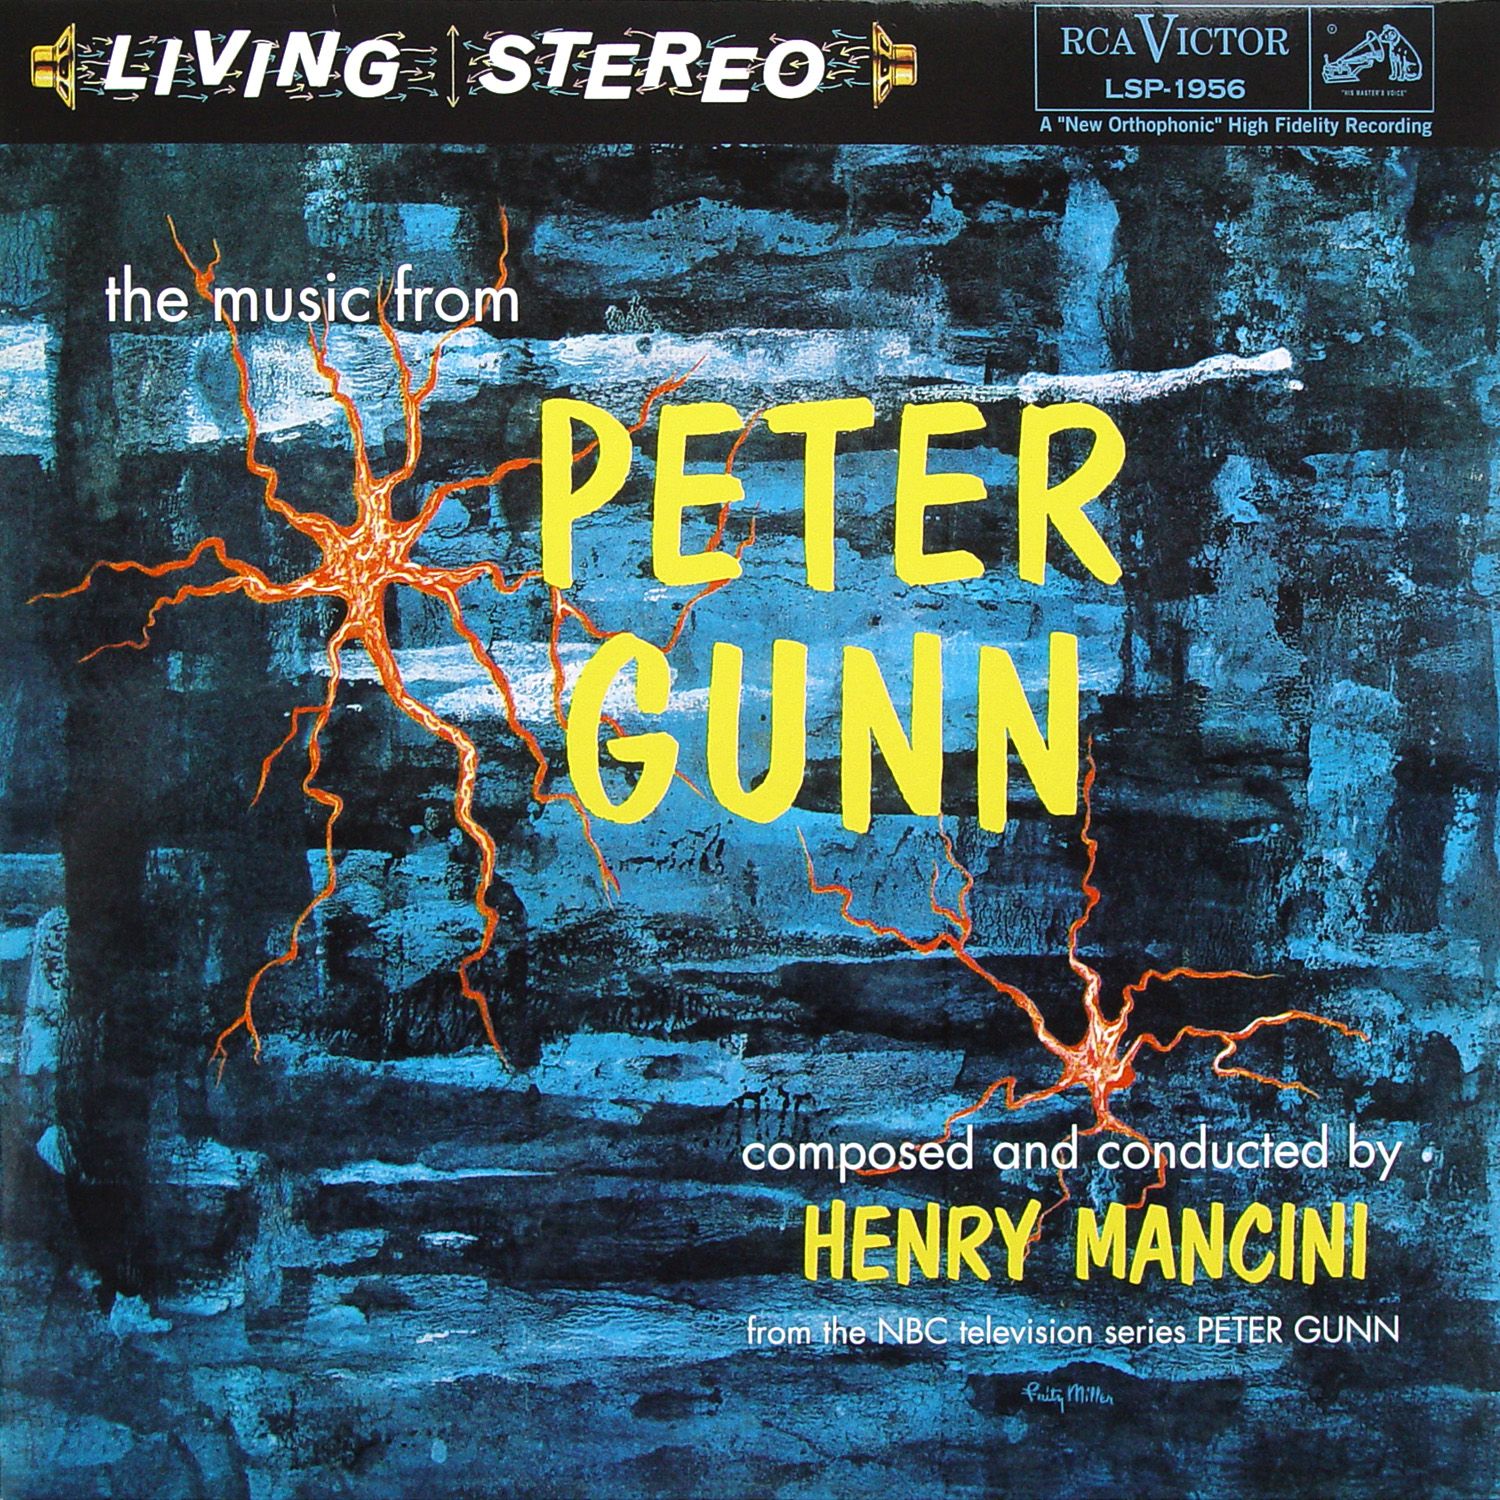 mancini henry виниловая пластинка mancini henry pink panther 4260019711984, Виниловая пластинкаOST, The Music From Peter Gunn (Henry Mancini) (Analogue)